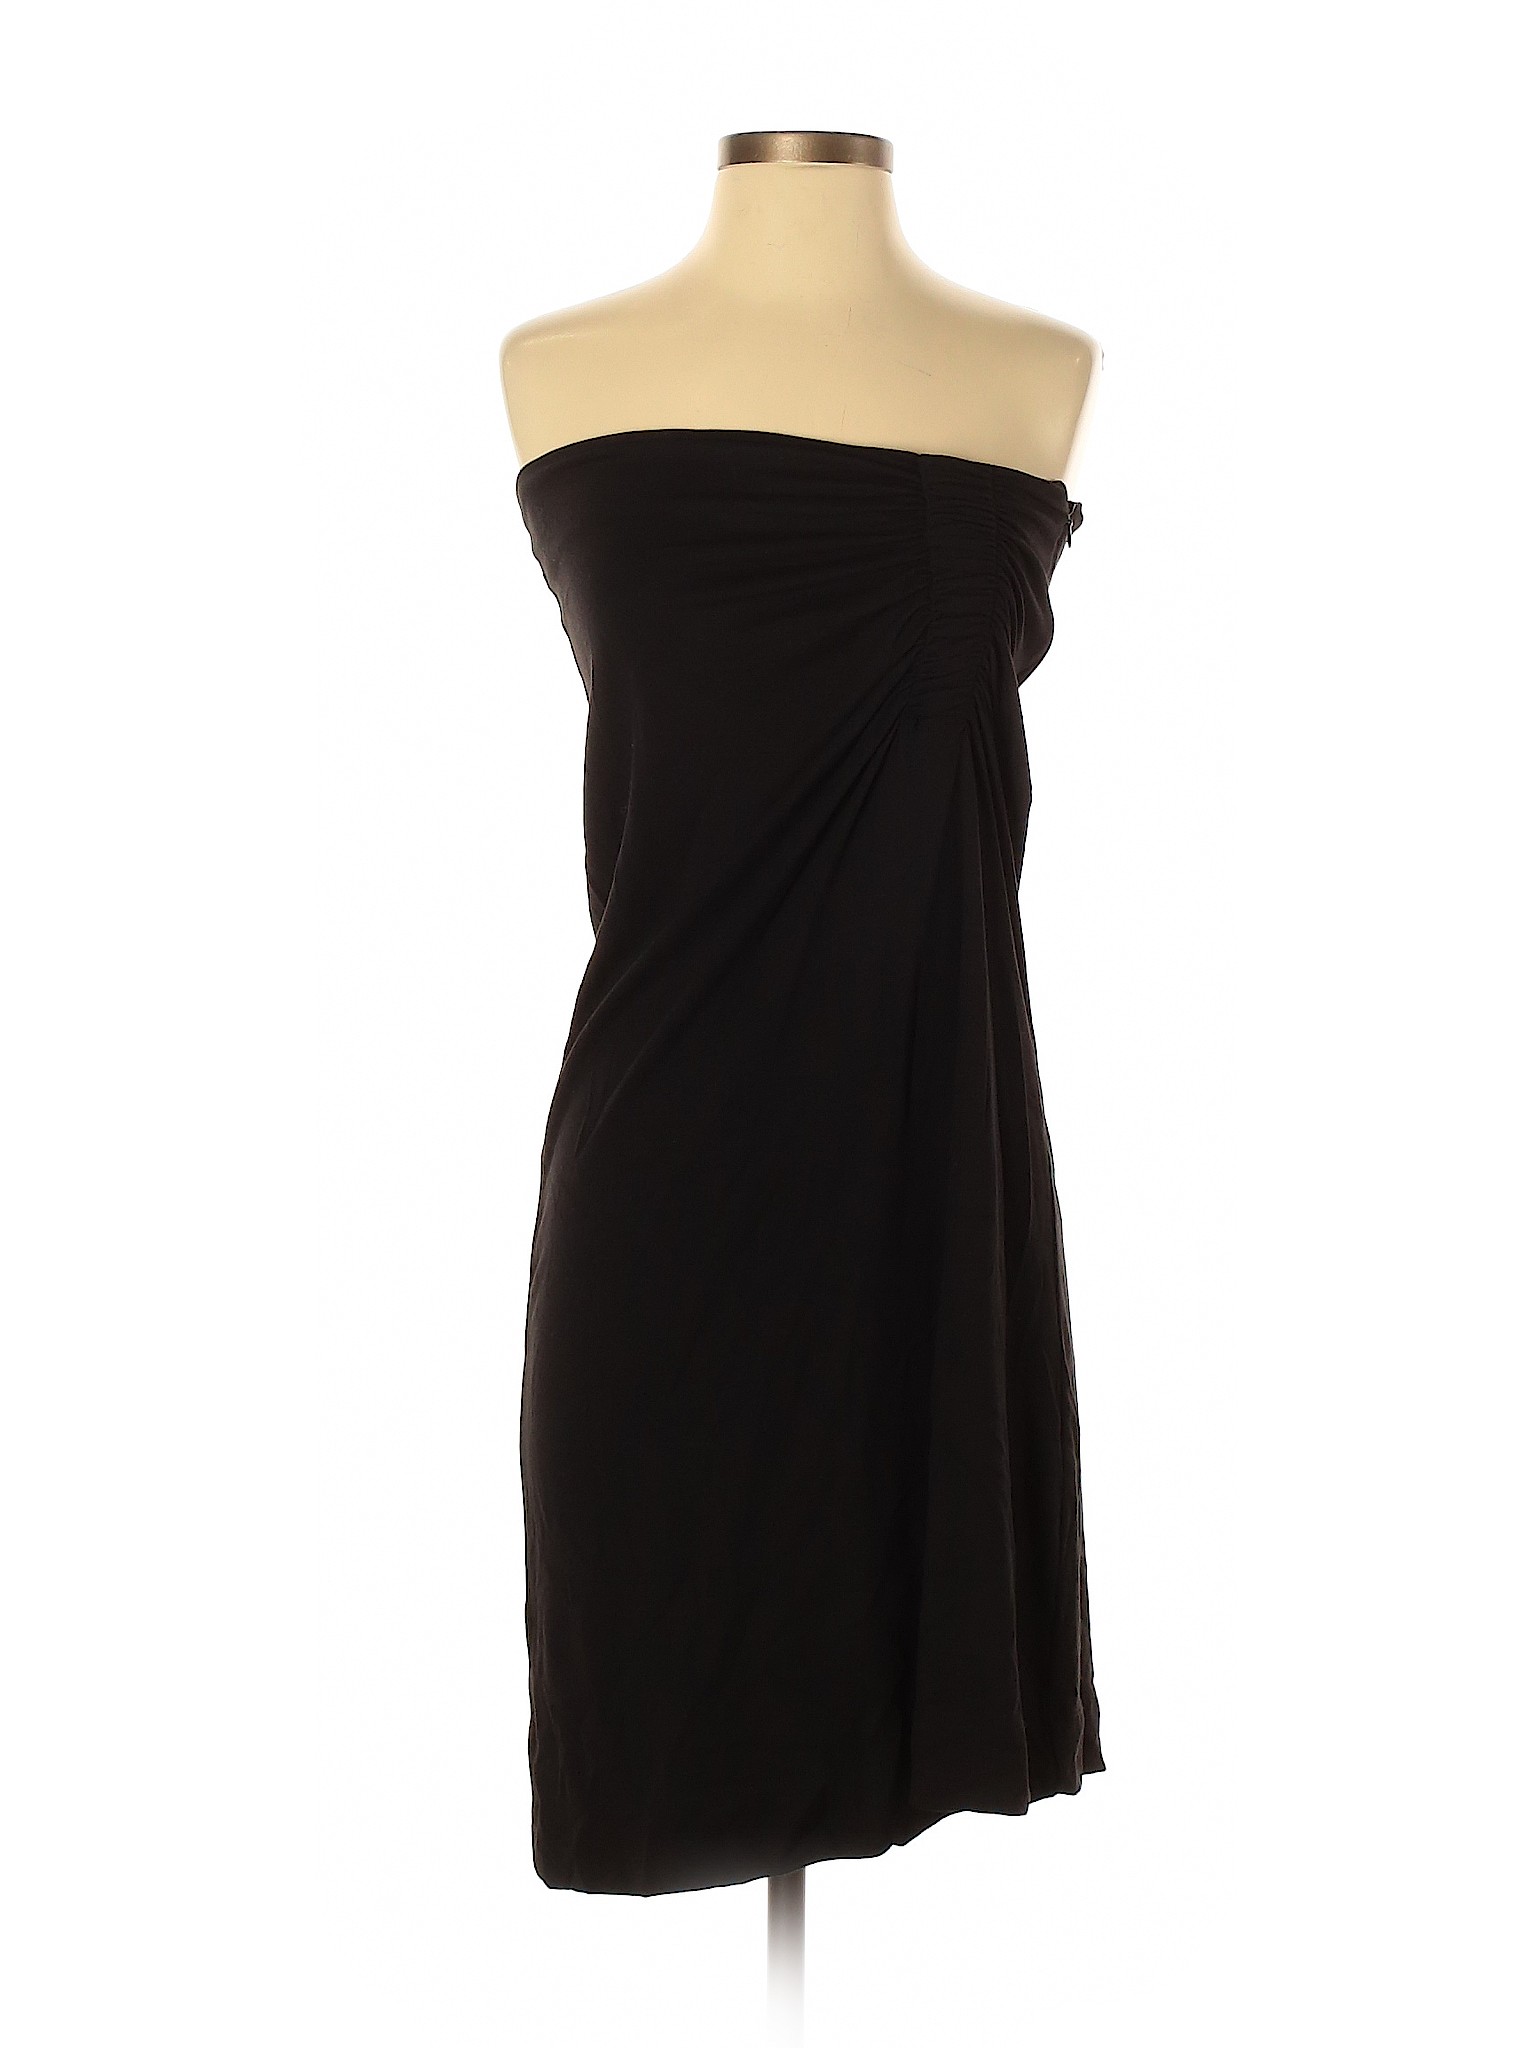 Gibson Women Black Casual Dress S | eBay